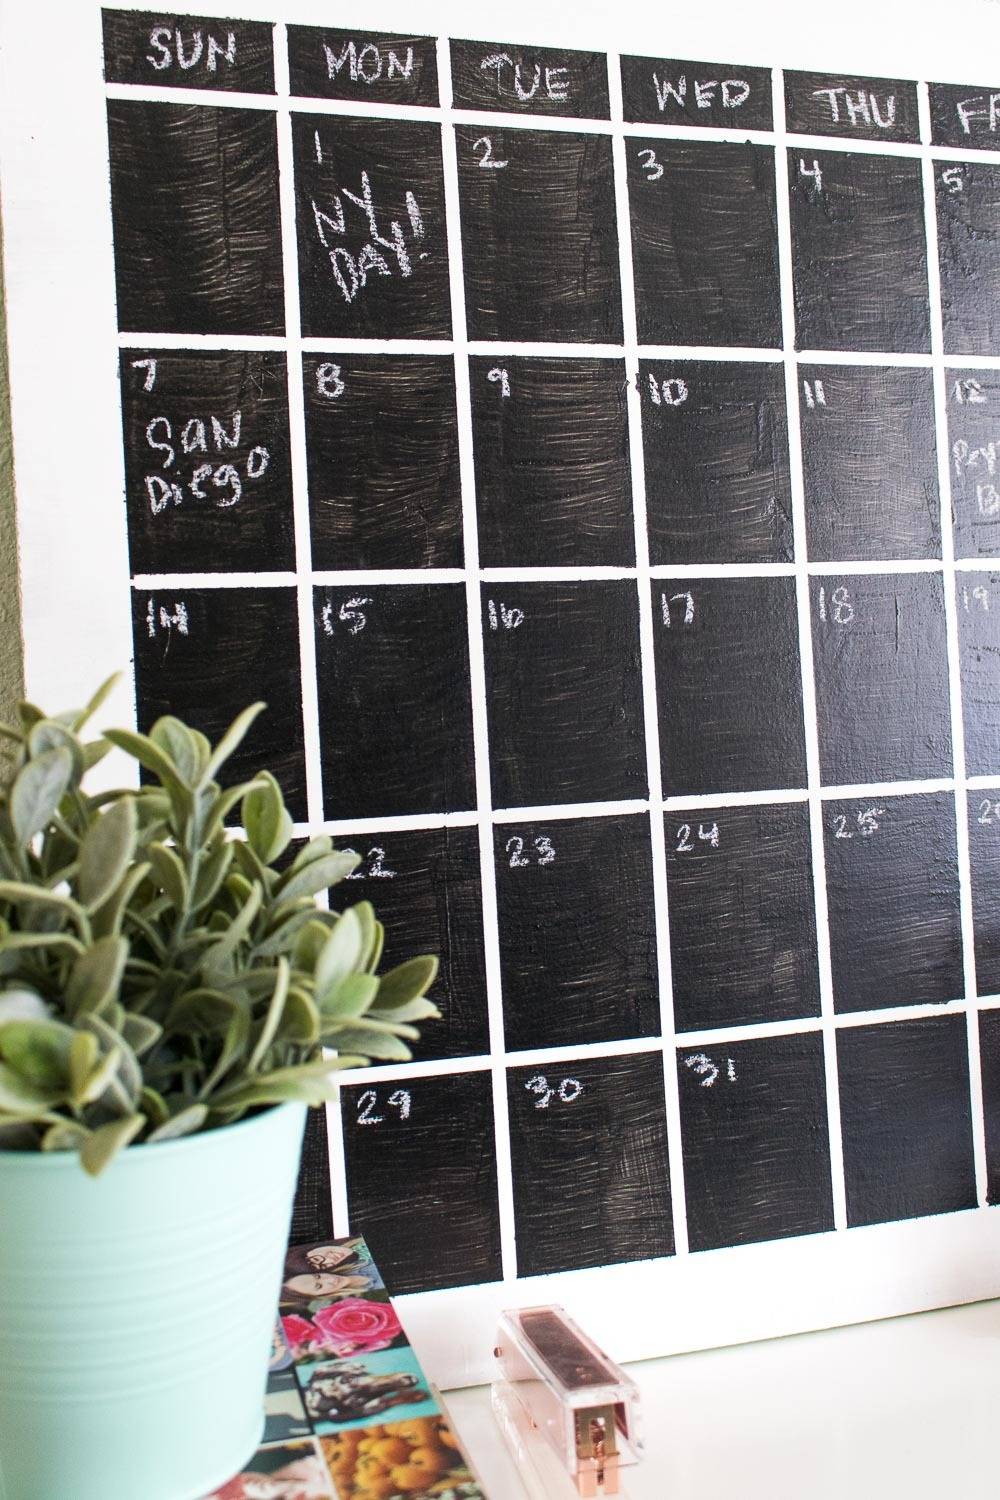 A calendar marked on a blackboard on the wall.